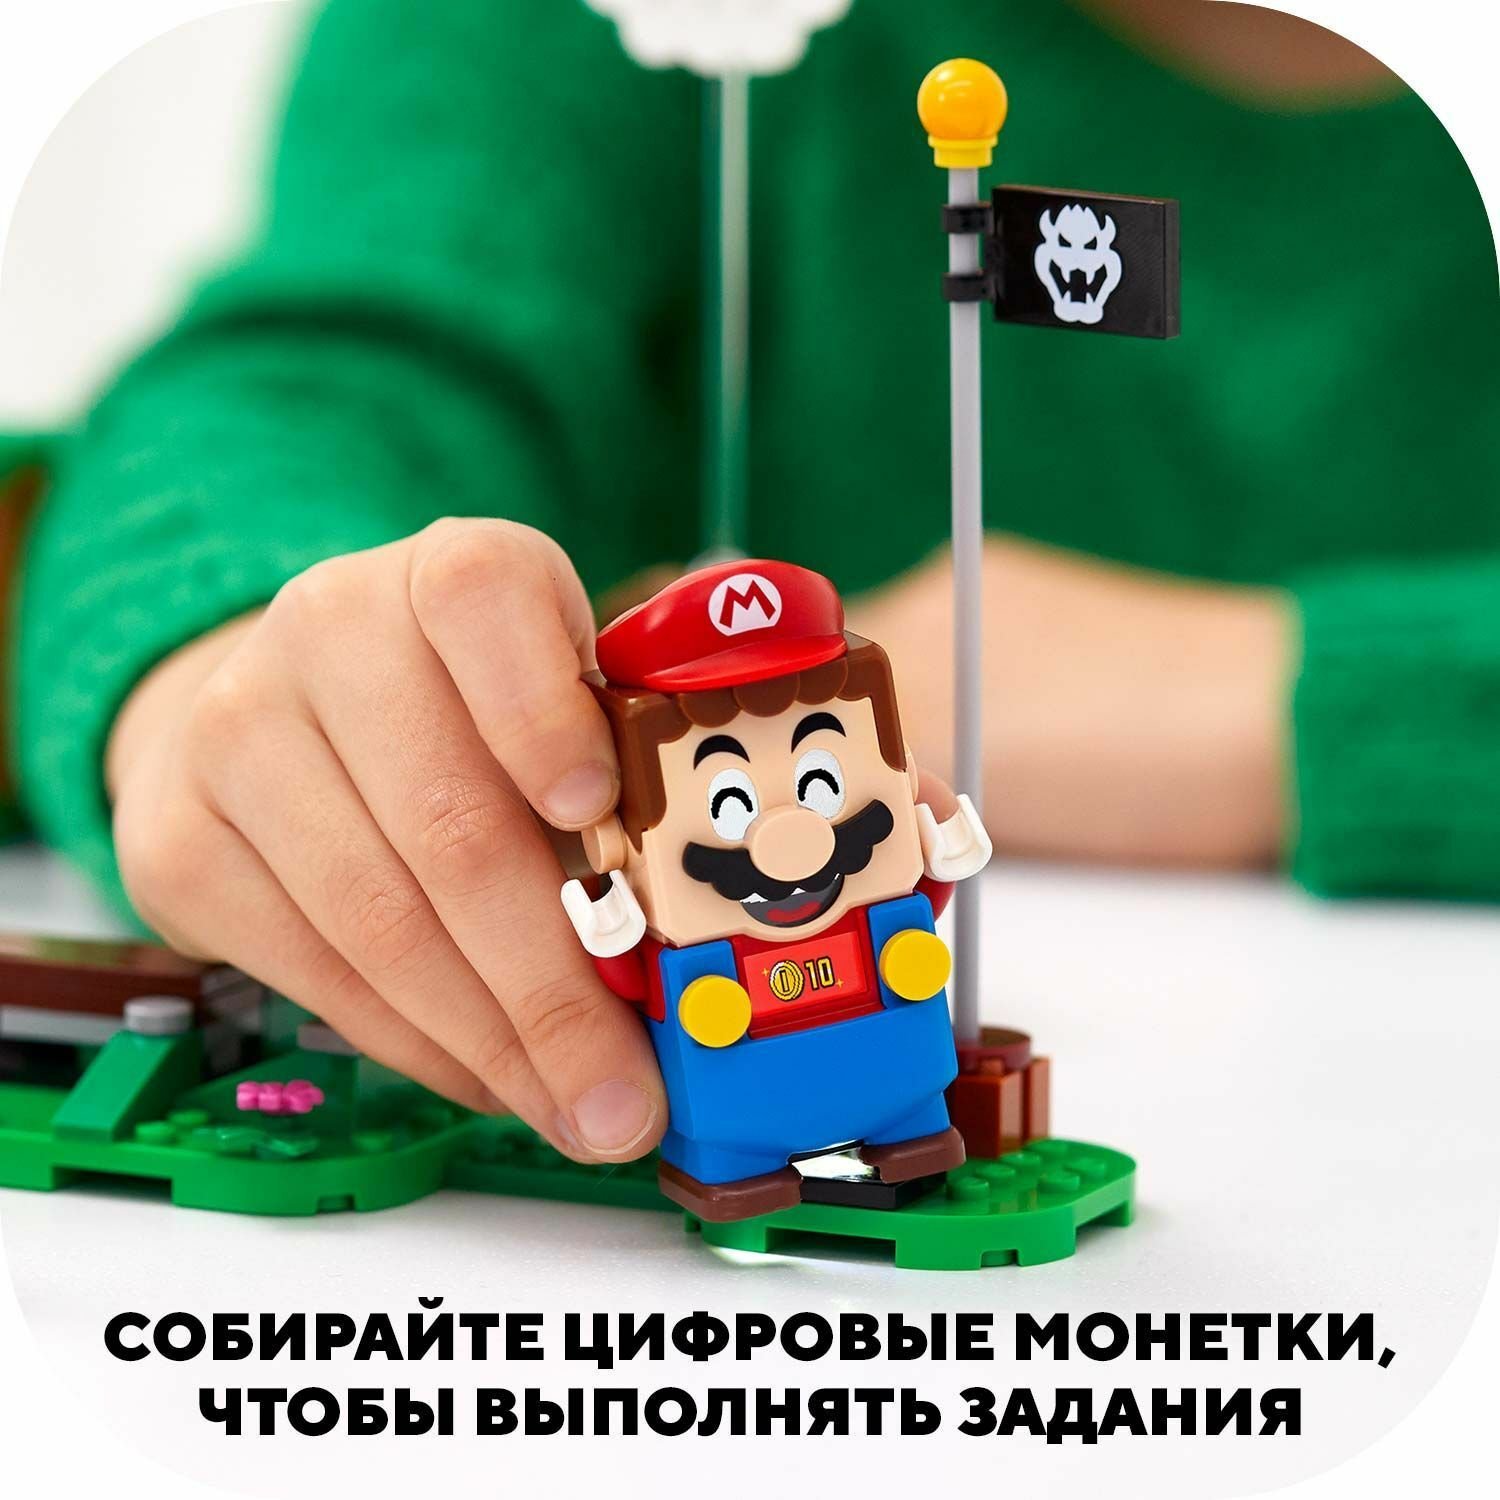 Lego Super Mario 71360 Приключения вместе с Марио